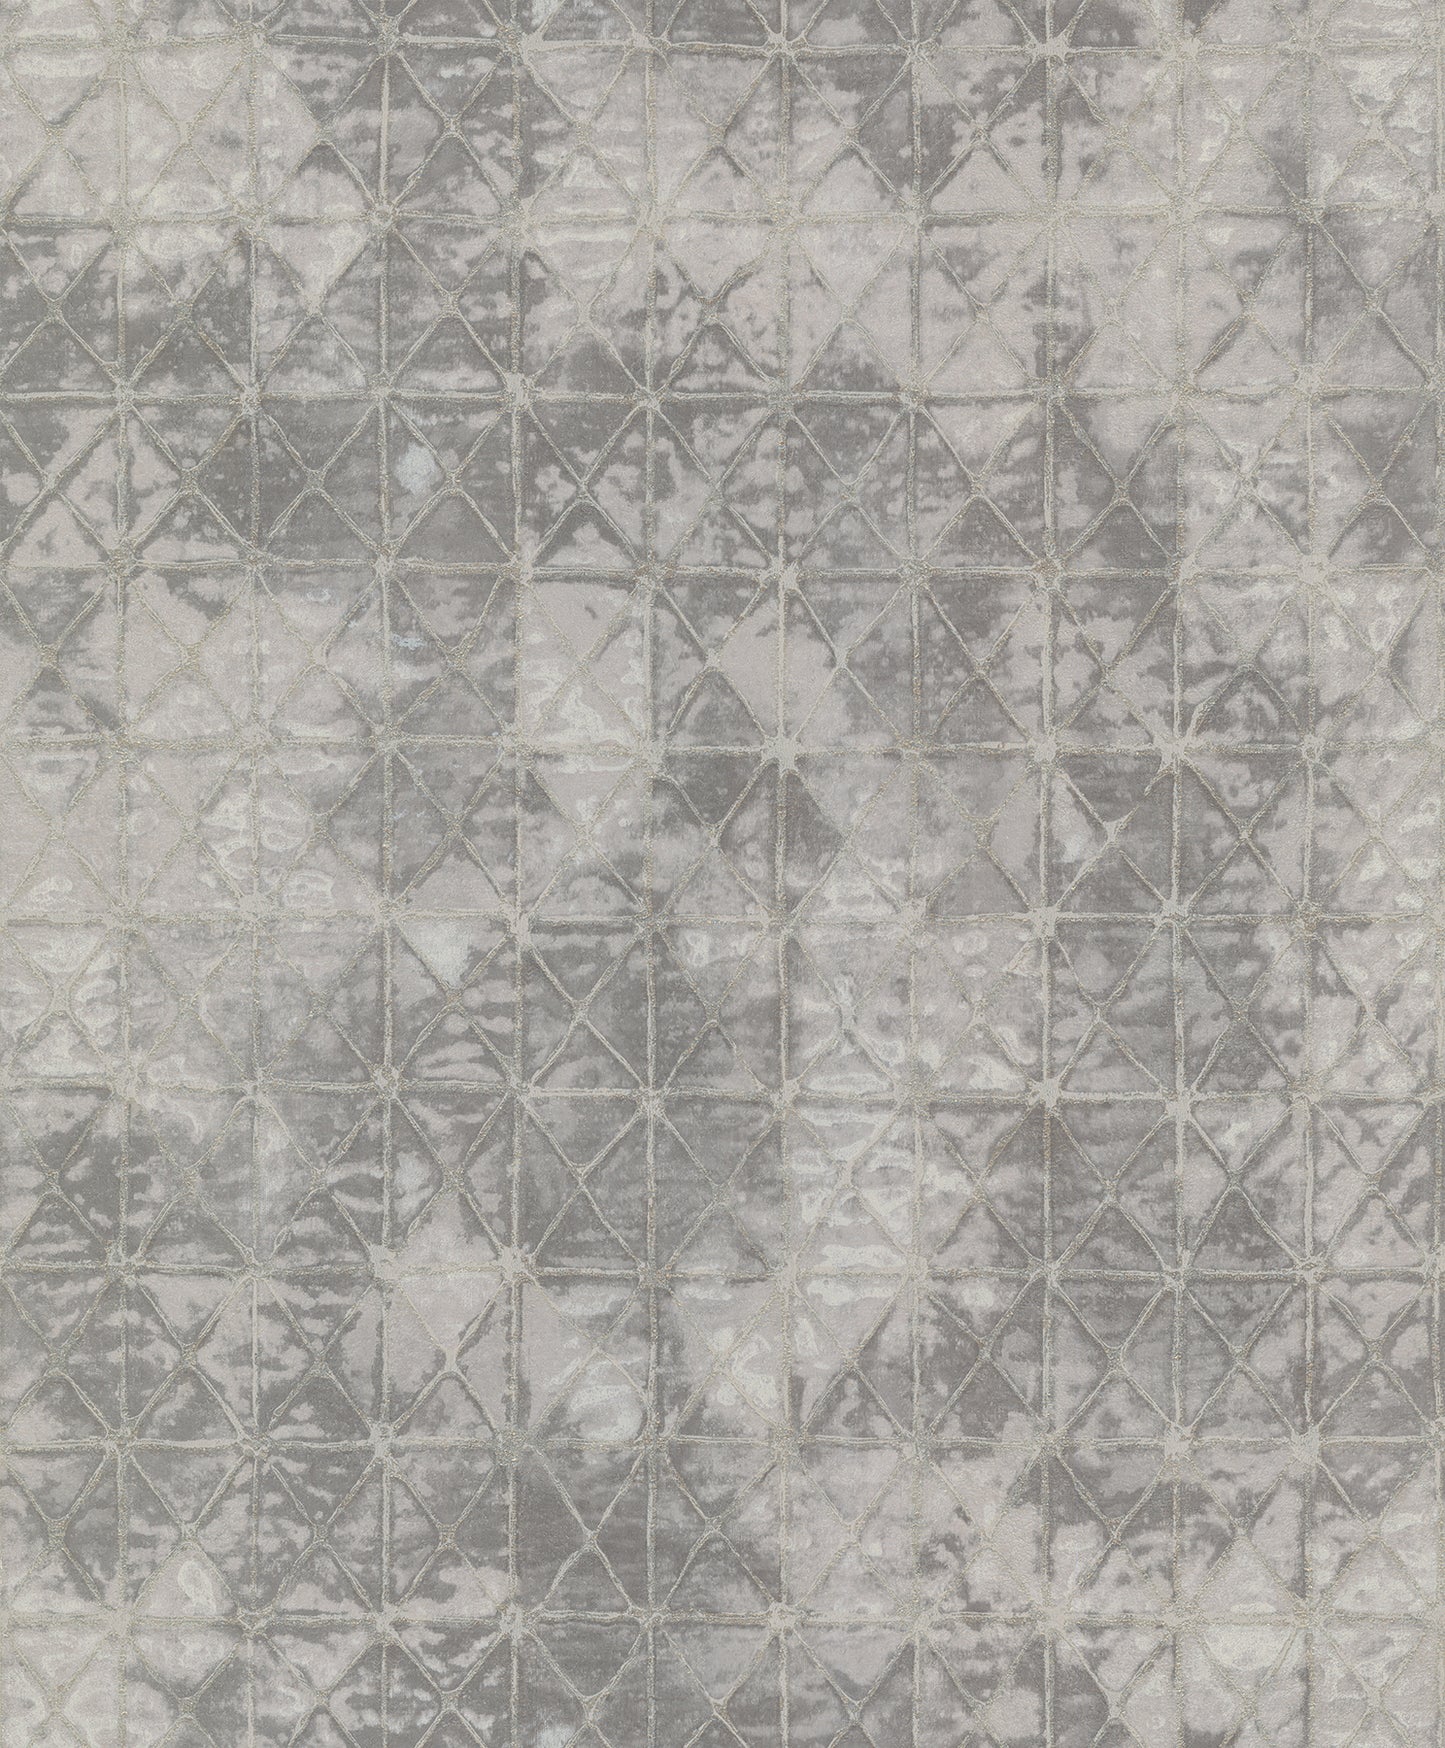 Select 2971-86376 Dimensions Odell Slate Antique Tiles Slate A-Street Prints Wallpaper